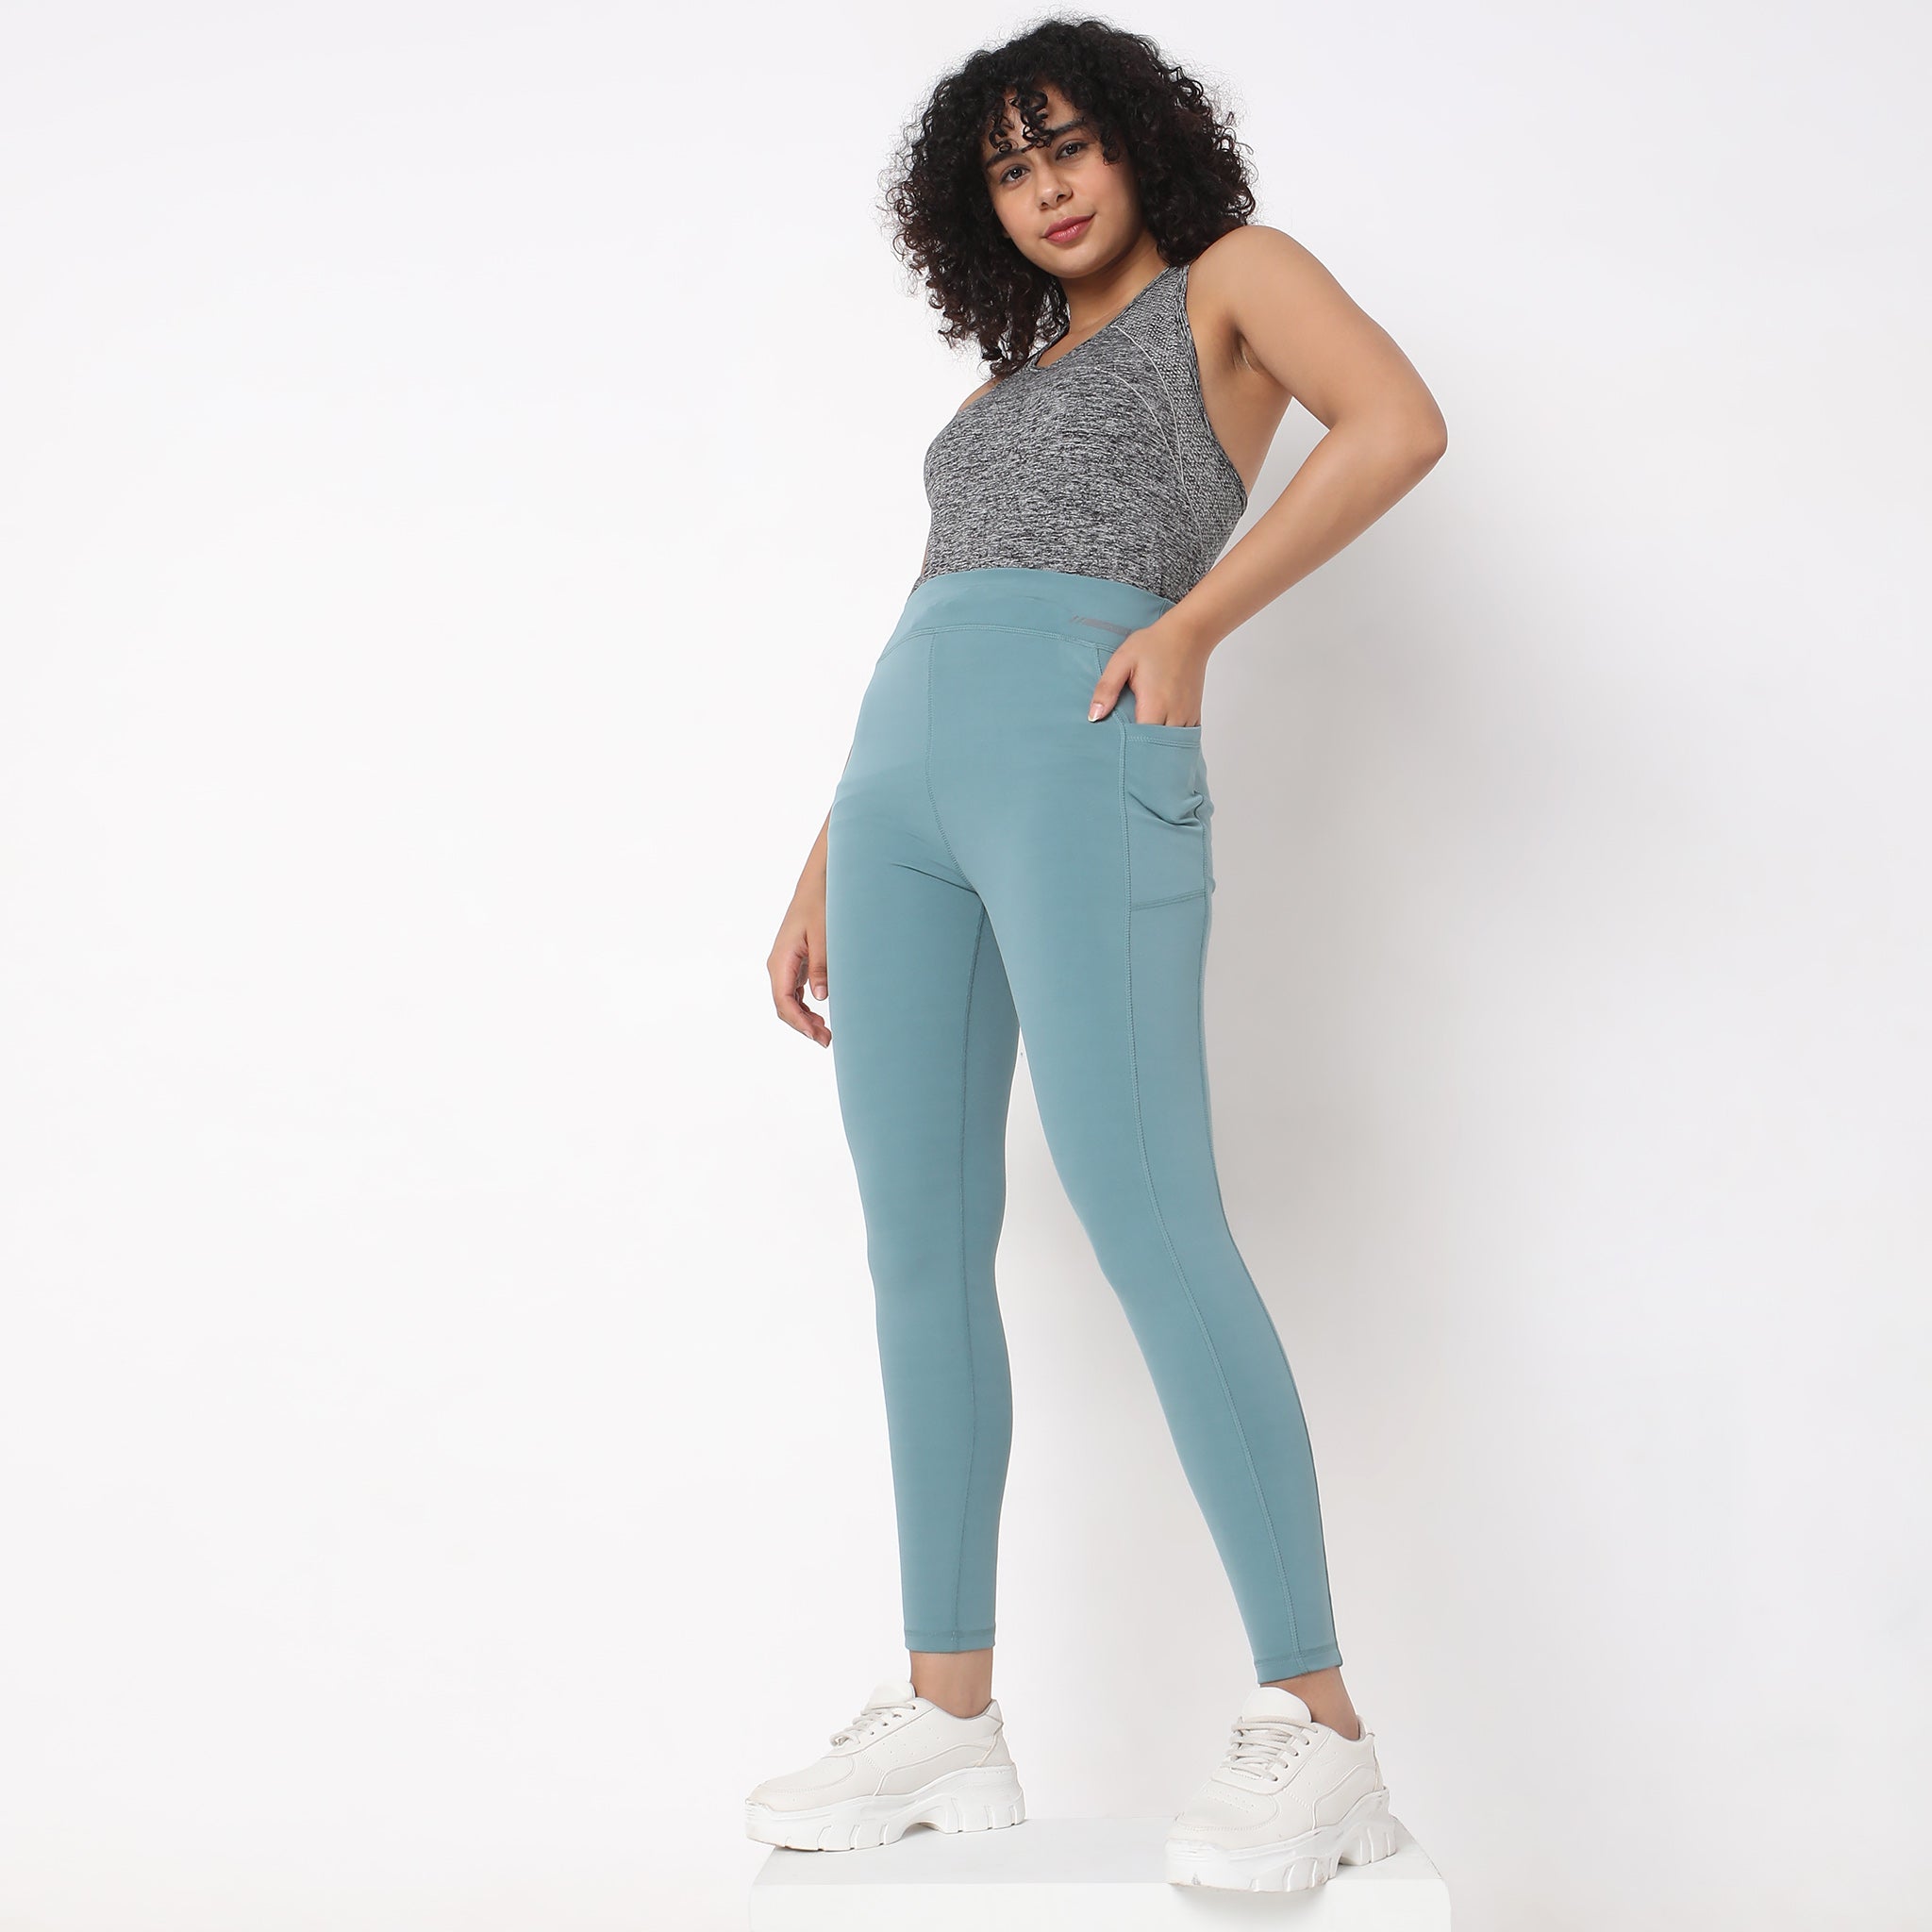 Shop and Buy Trending Legging Designs for Women – TYMELSS Shop top